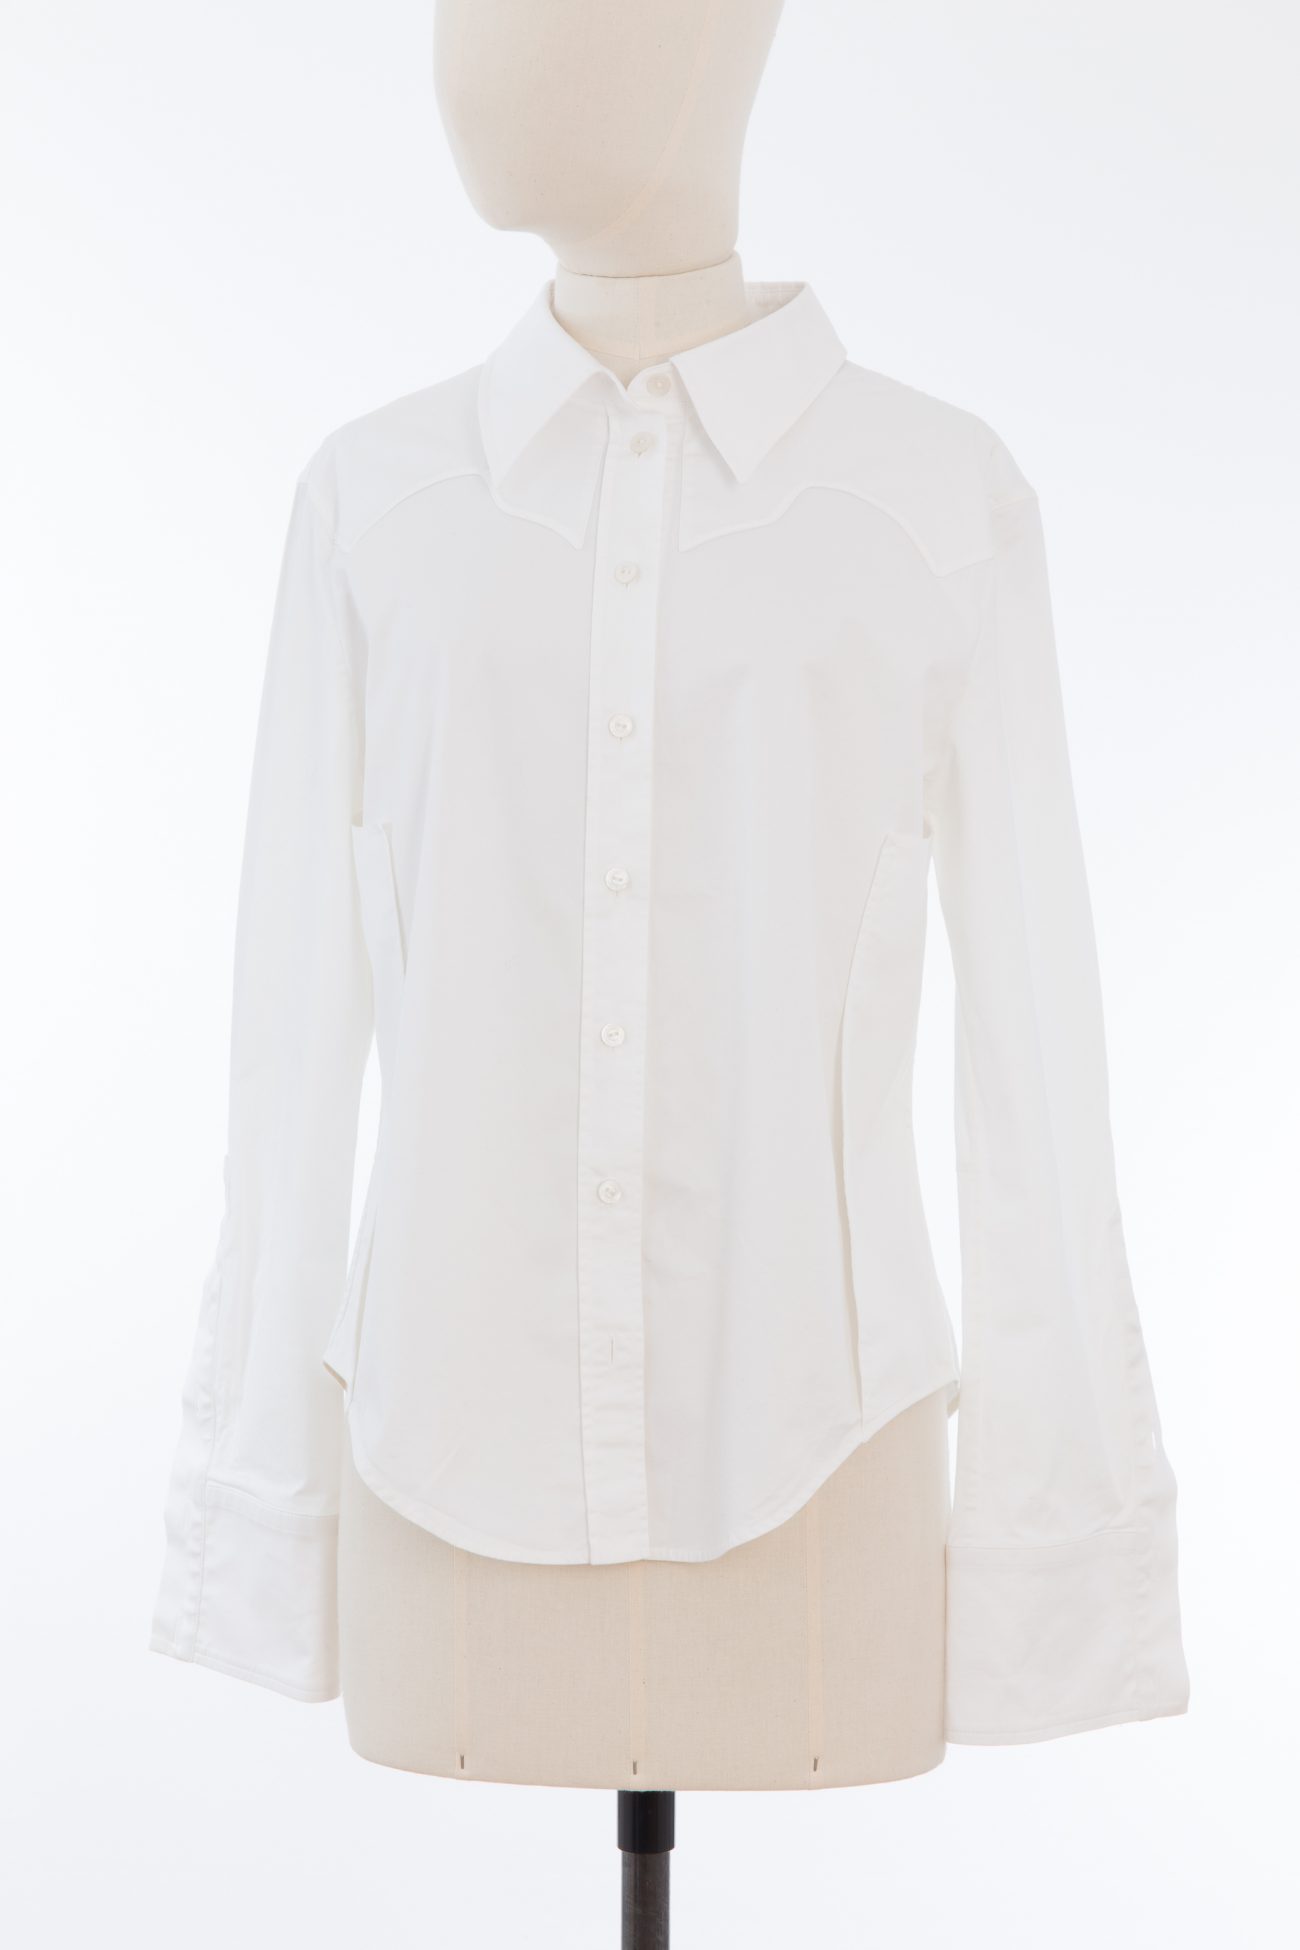 Louis Vuitton cotton stretch shirt